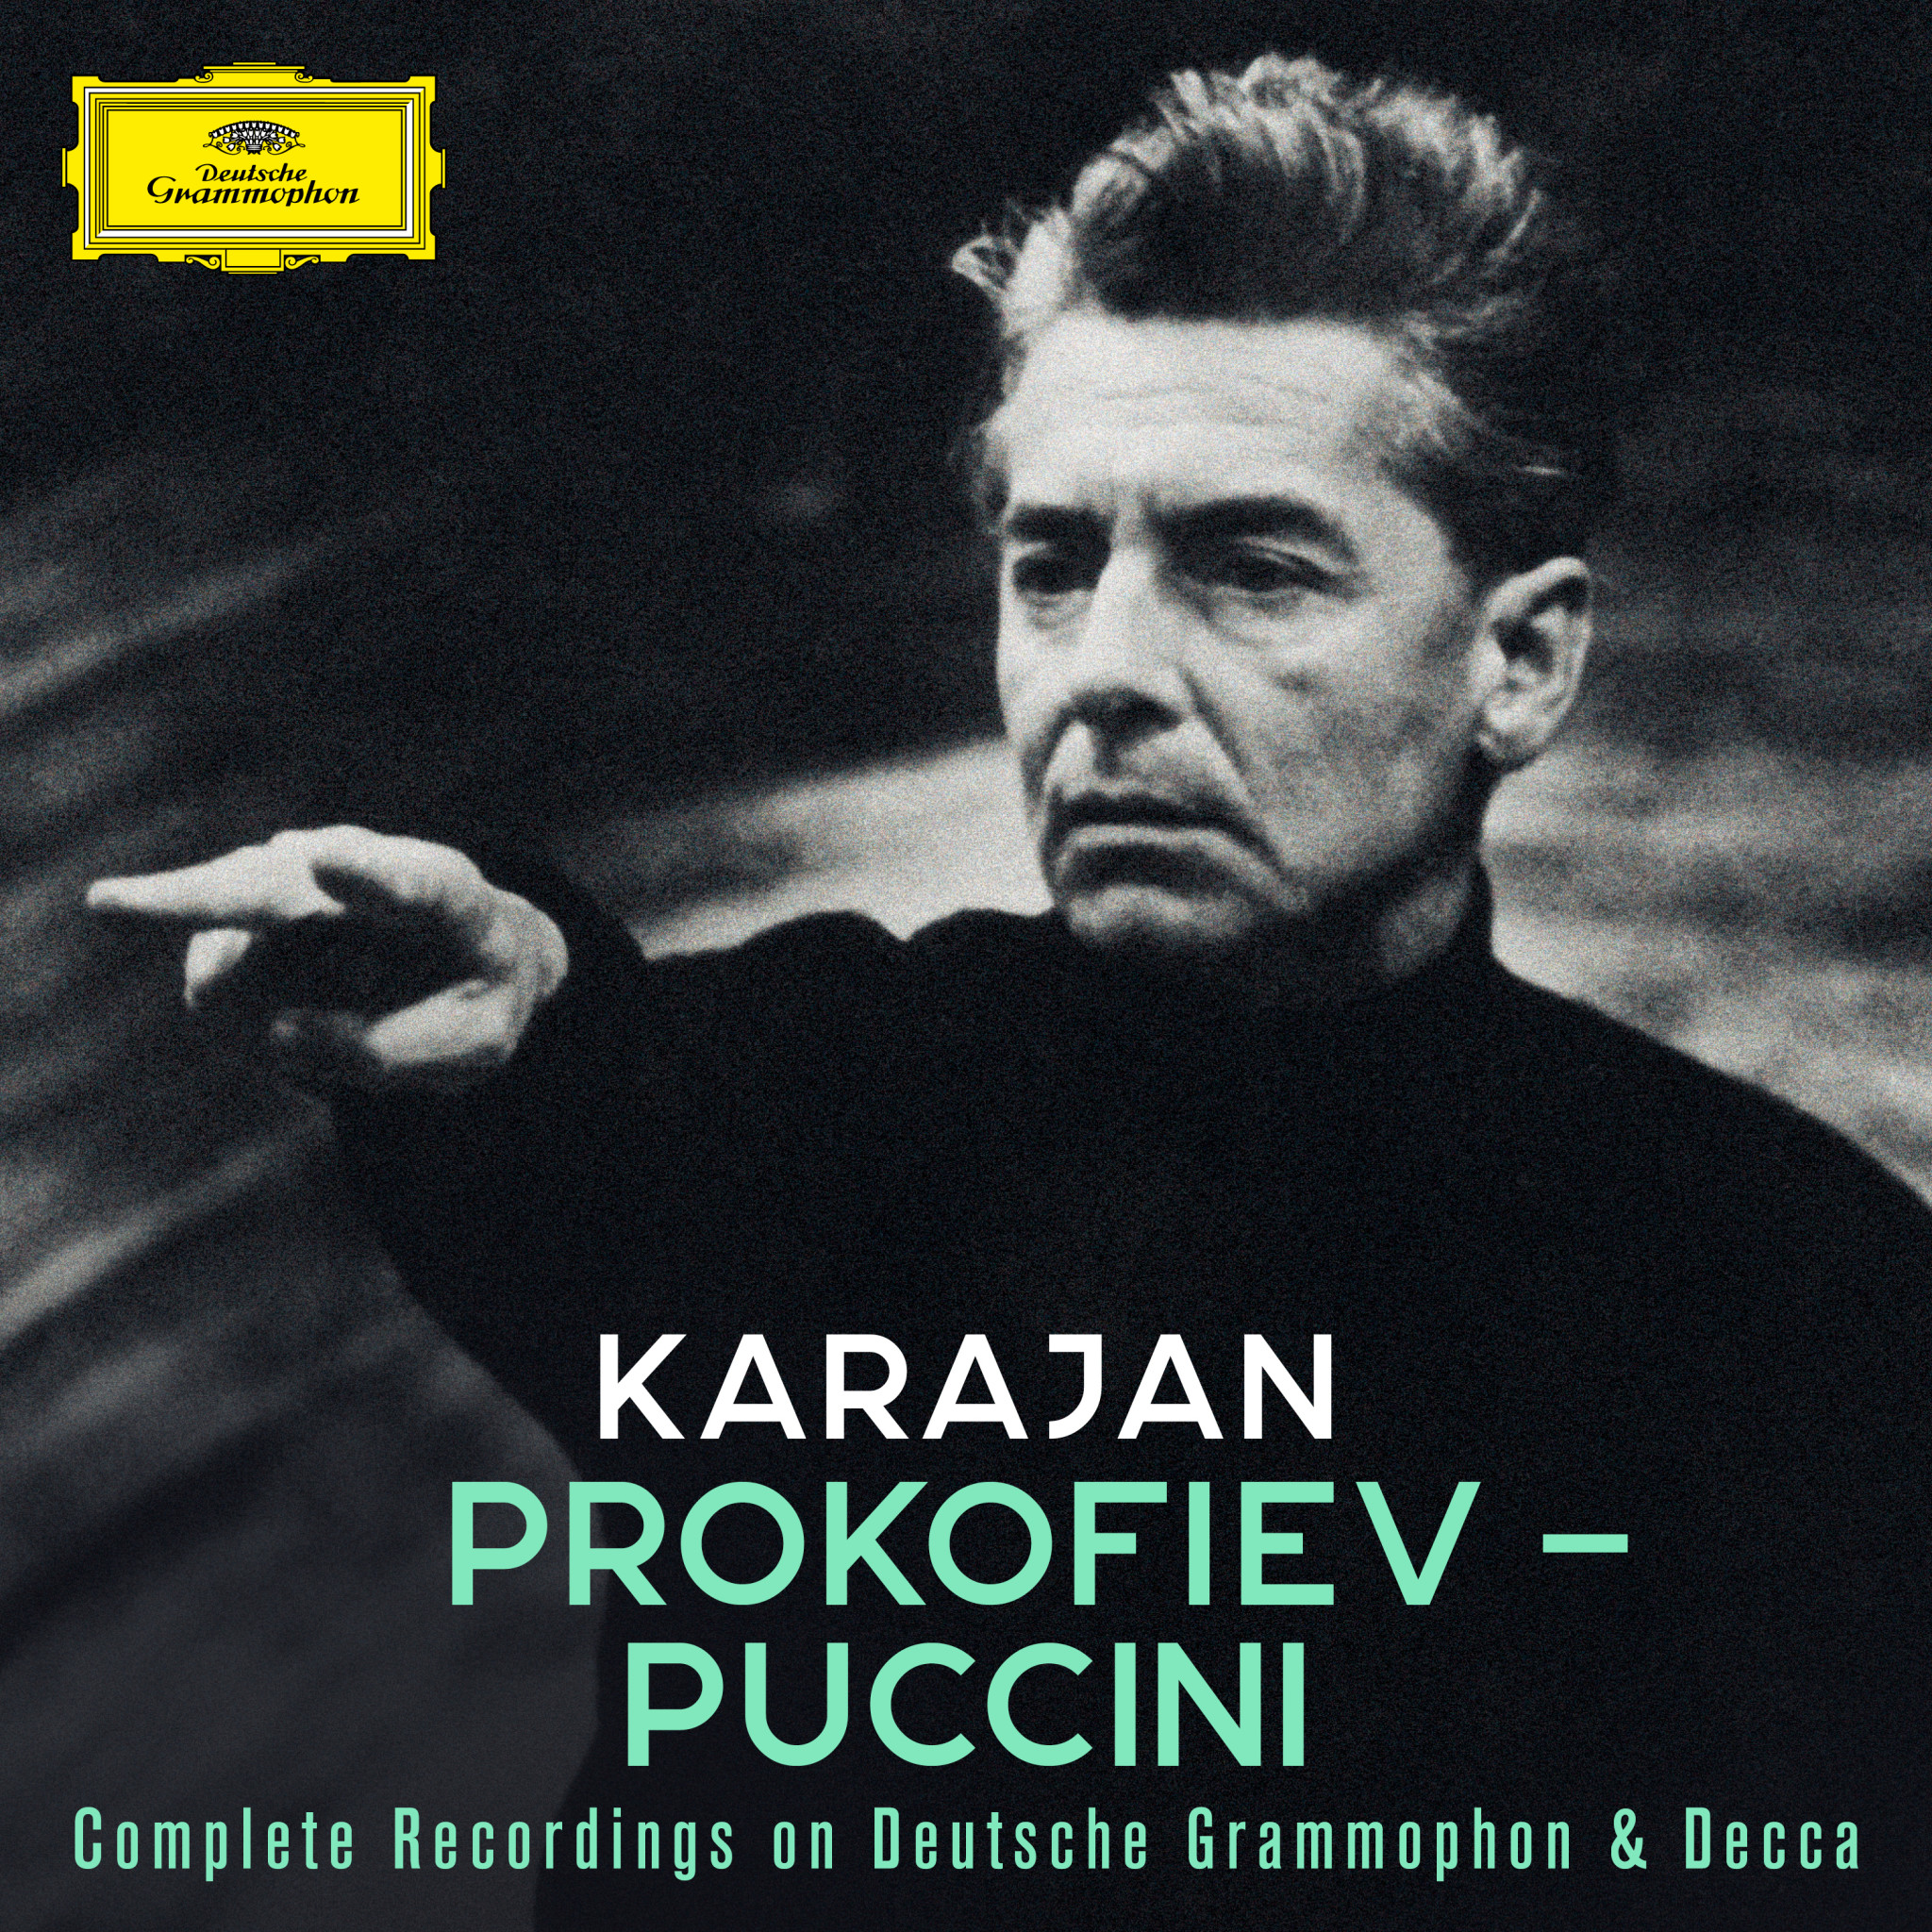 Karajan: Prokofiev - Puccini